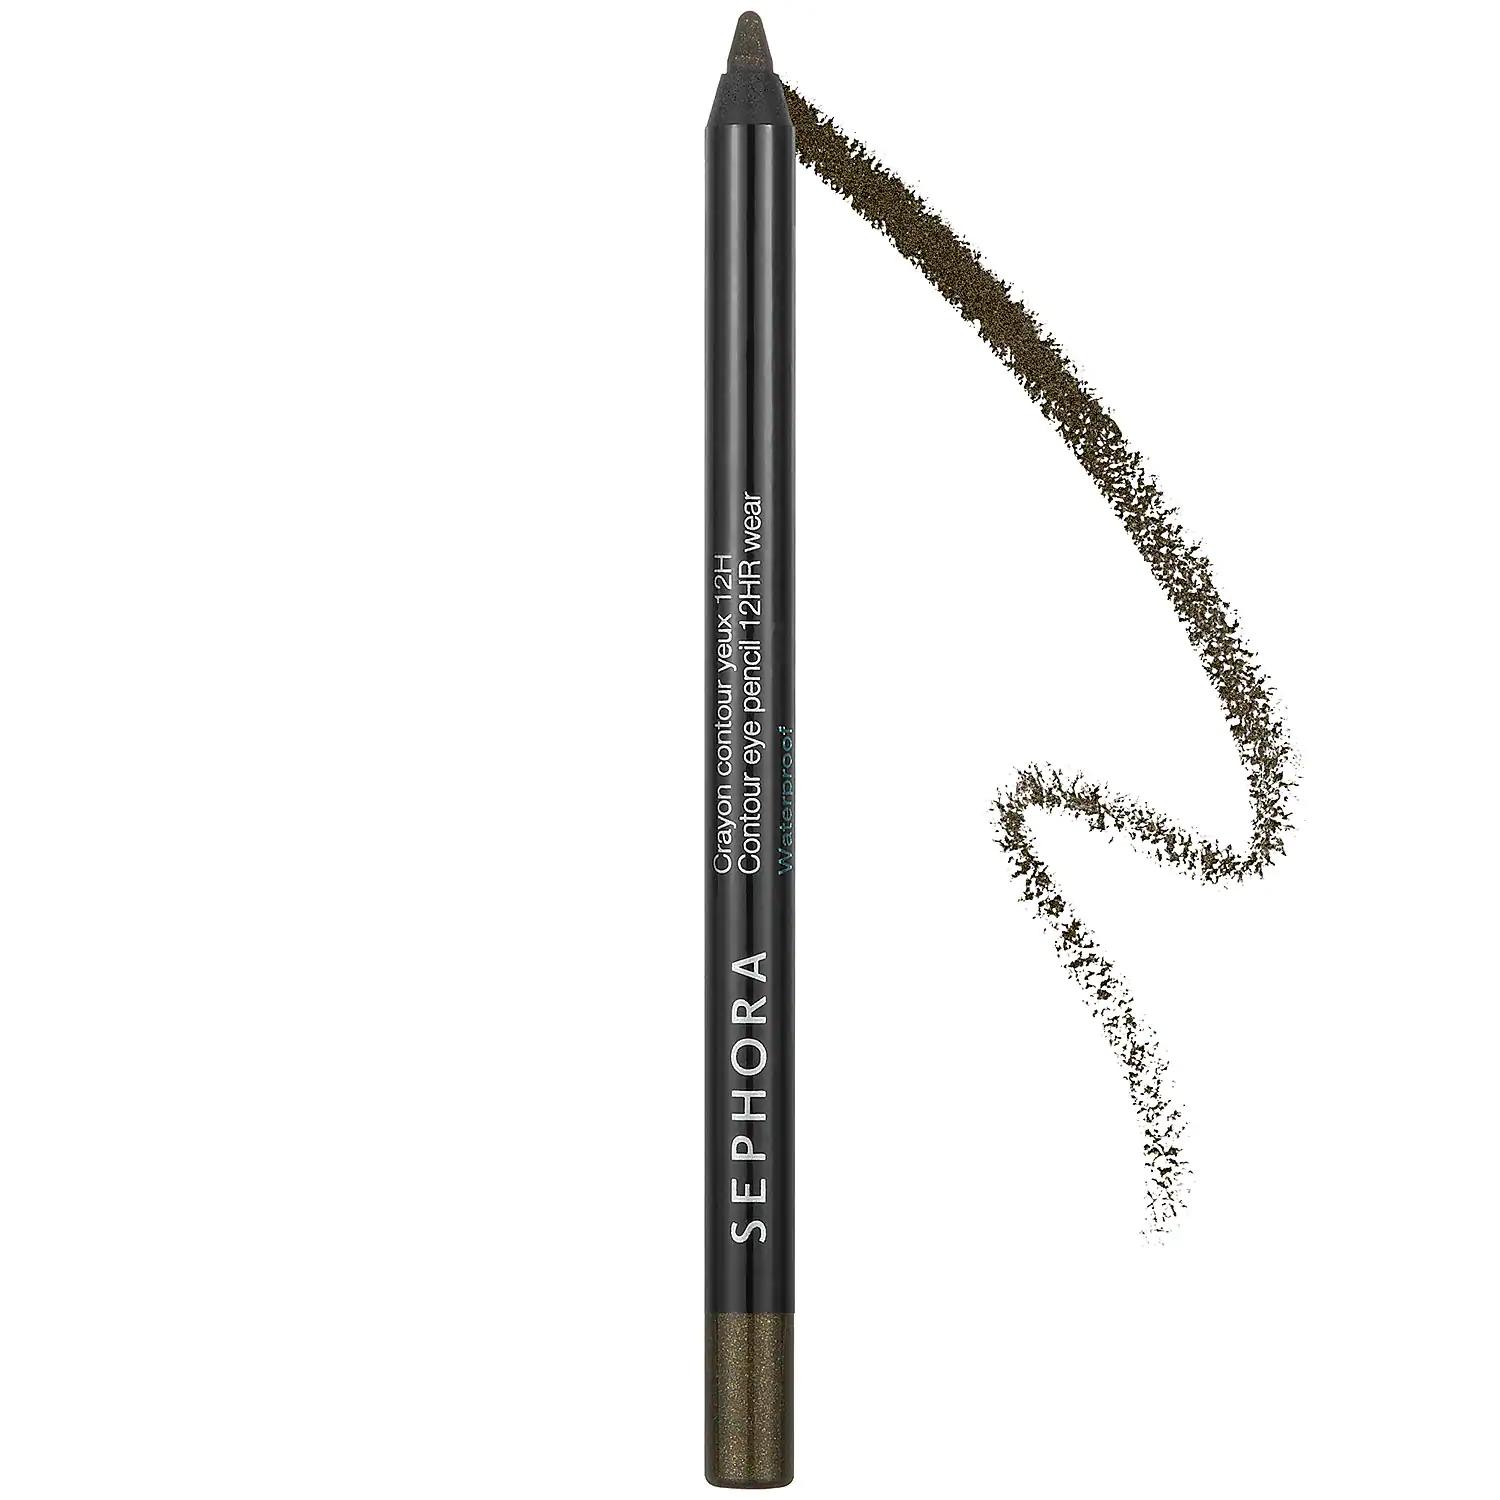 Sephora Eye Pencil 12hr Wear Waterproof Diving In Malaysia 18